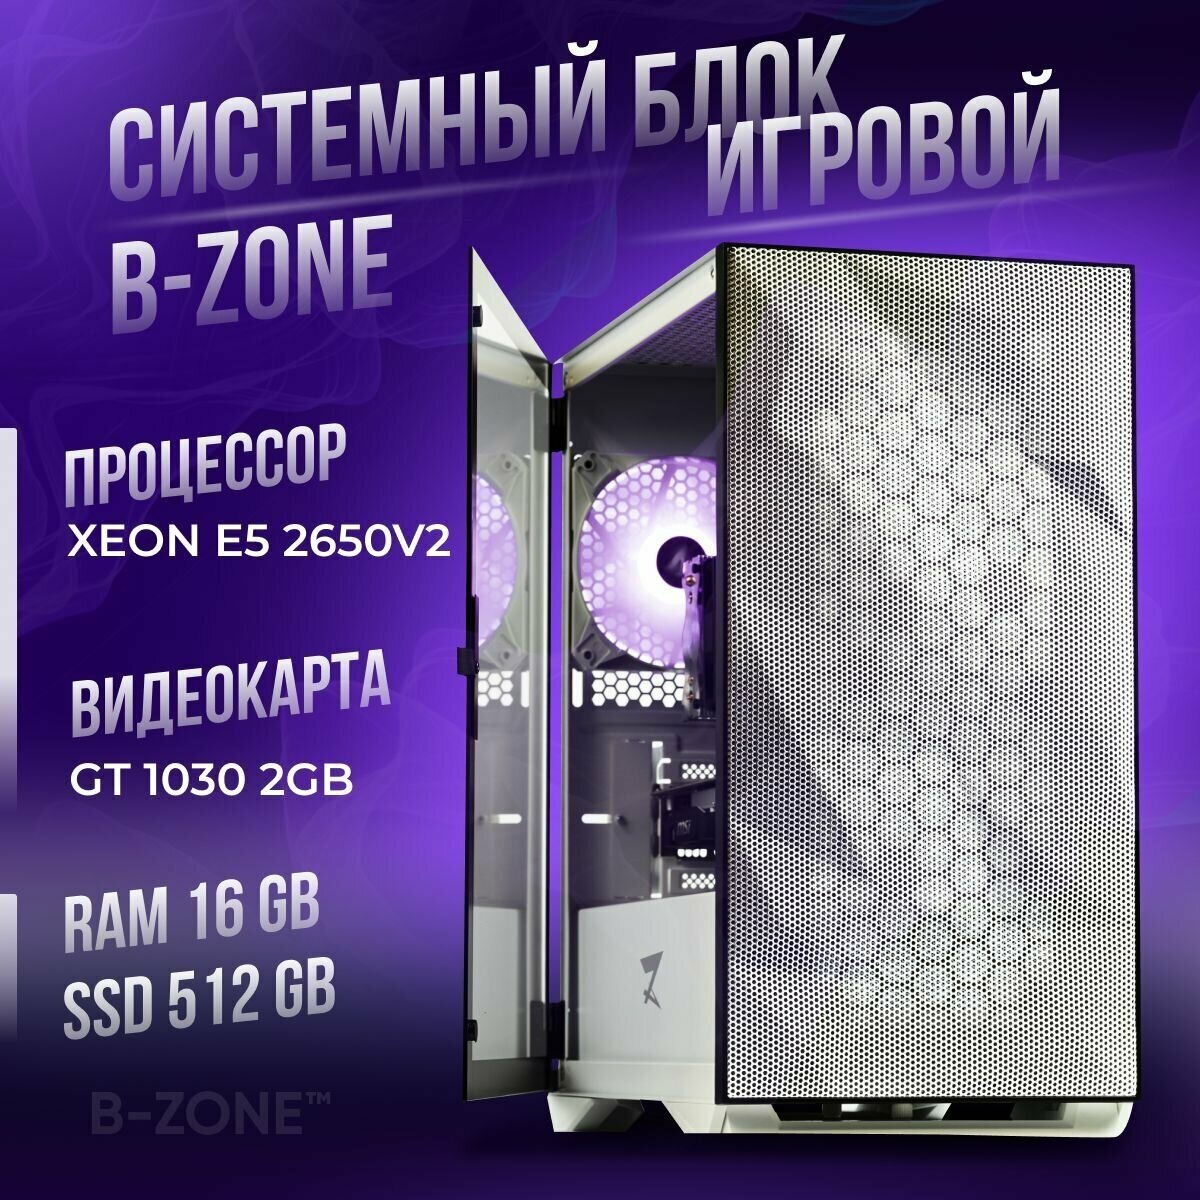 Игровой компьютер B-Zone ПК E5 2650V2 / GT1030 2GB / 16GB / 512GB SSD